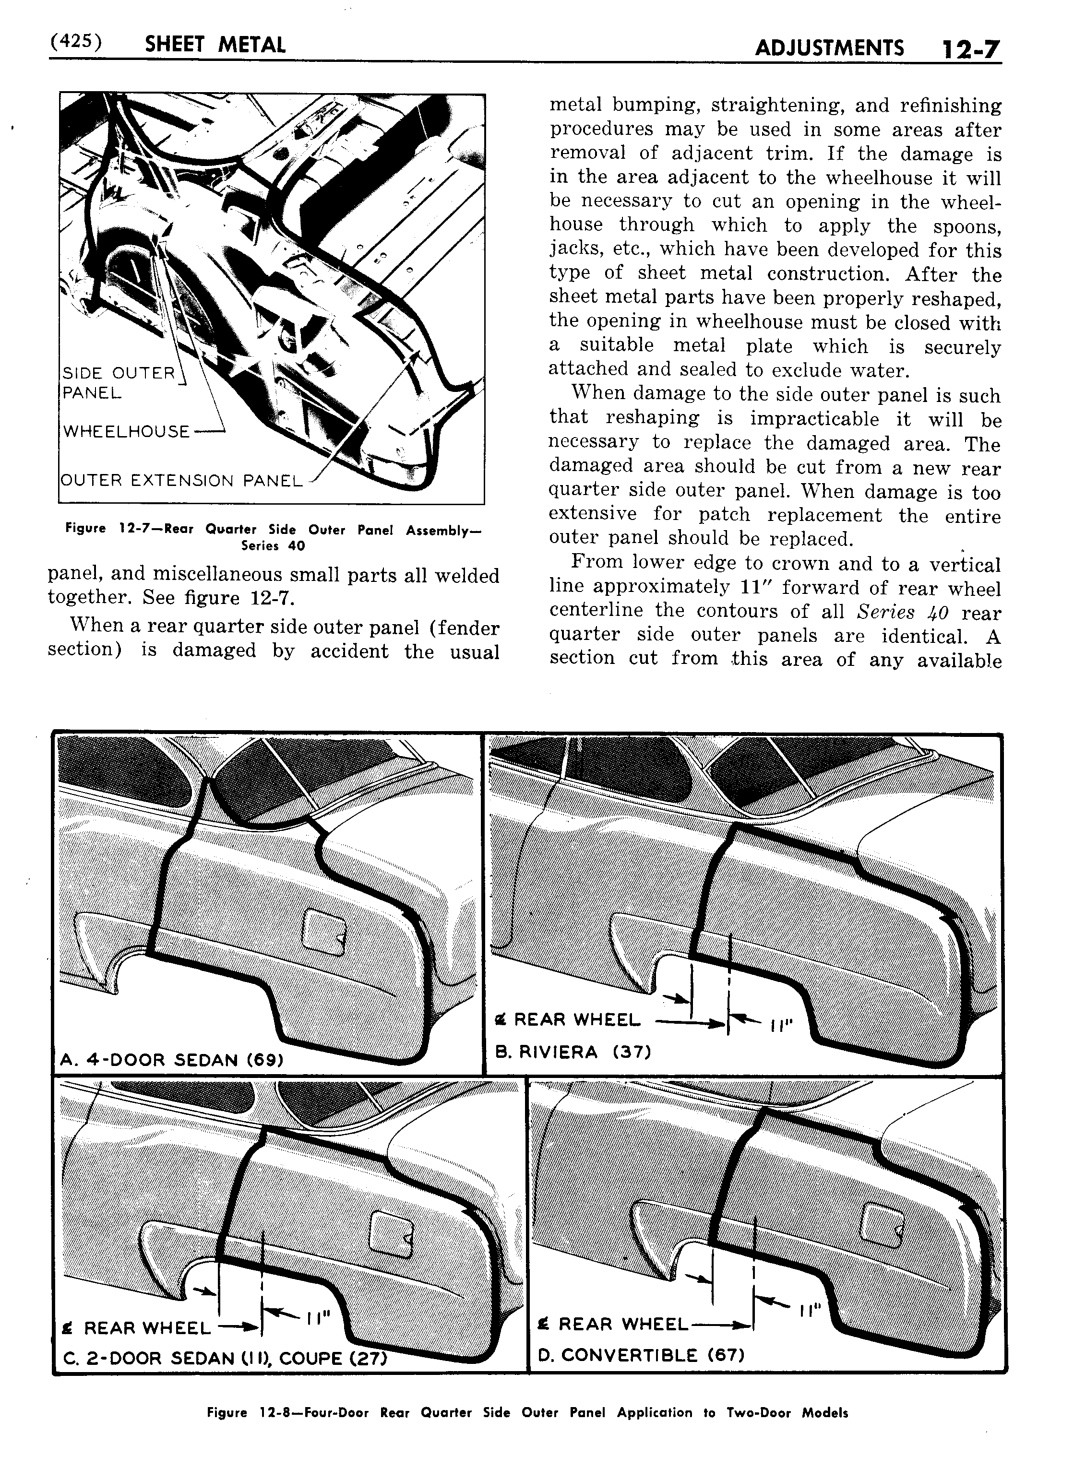 n_13 1951 Buick Shop Manual - Sheet Metal-007-007.jpg